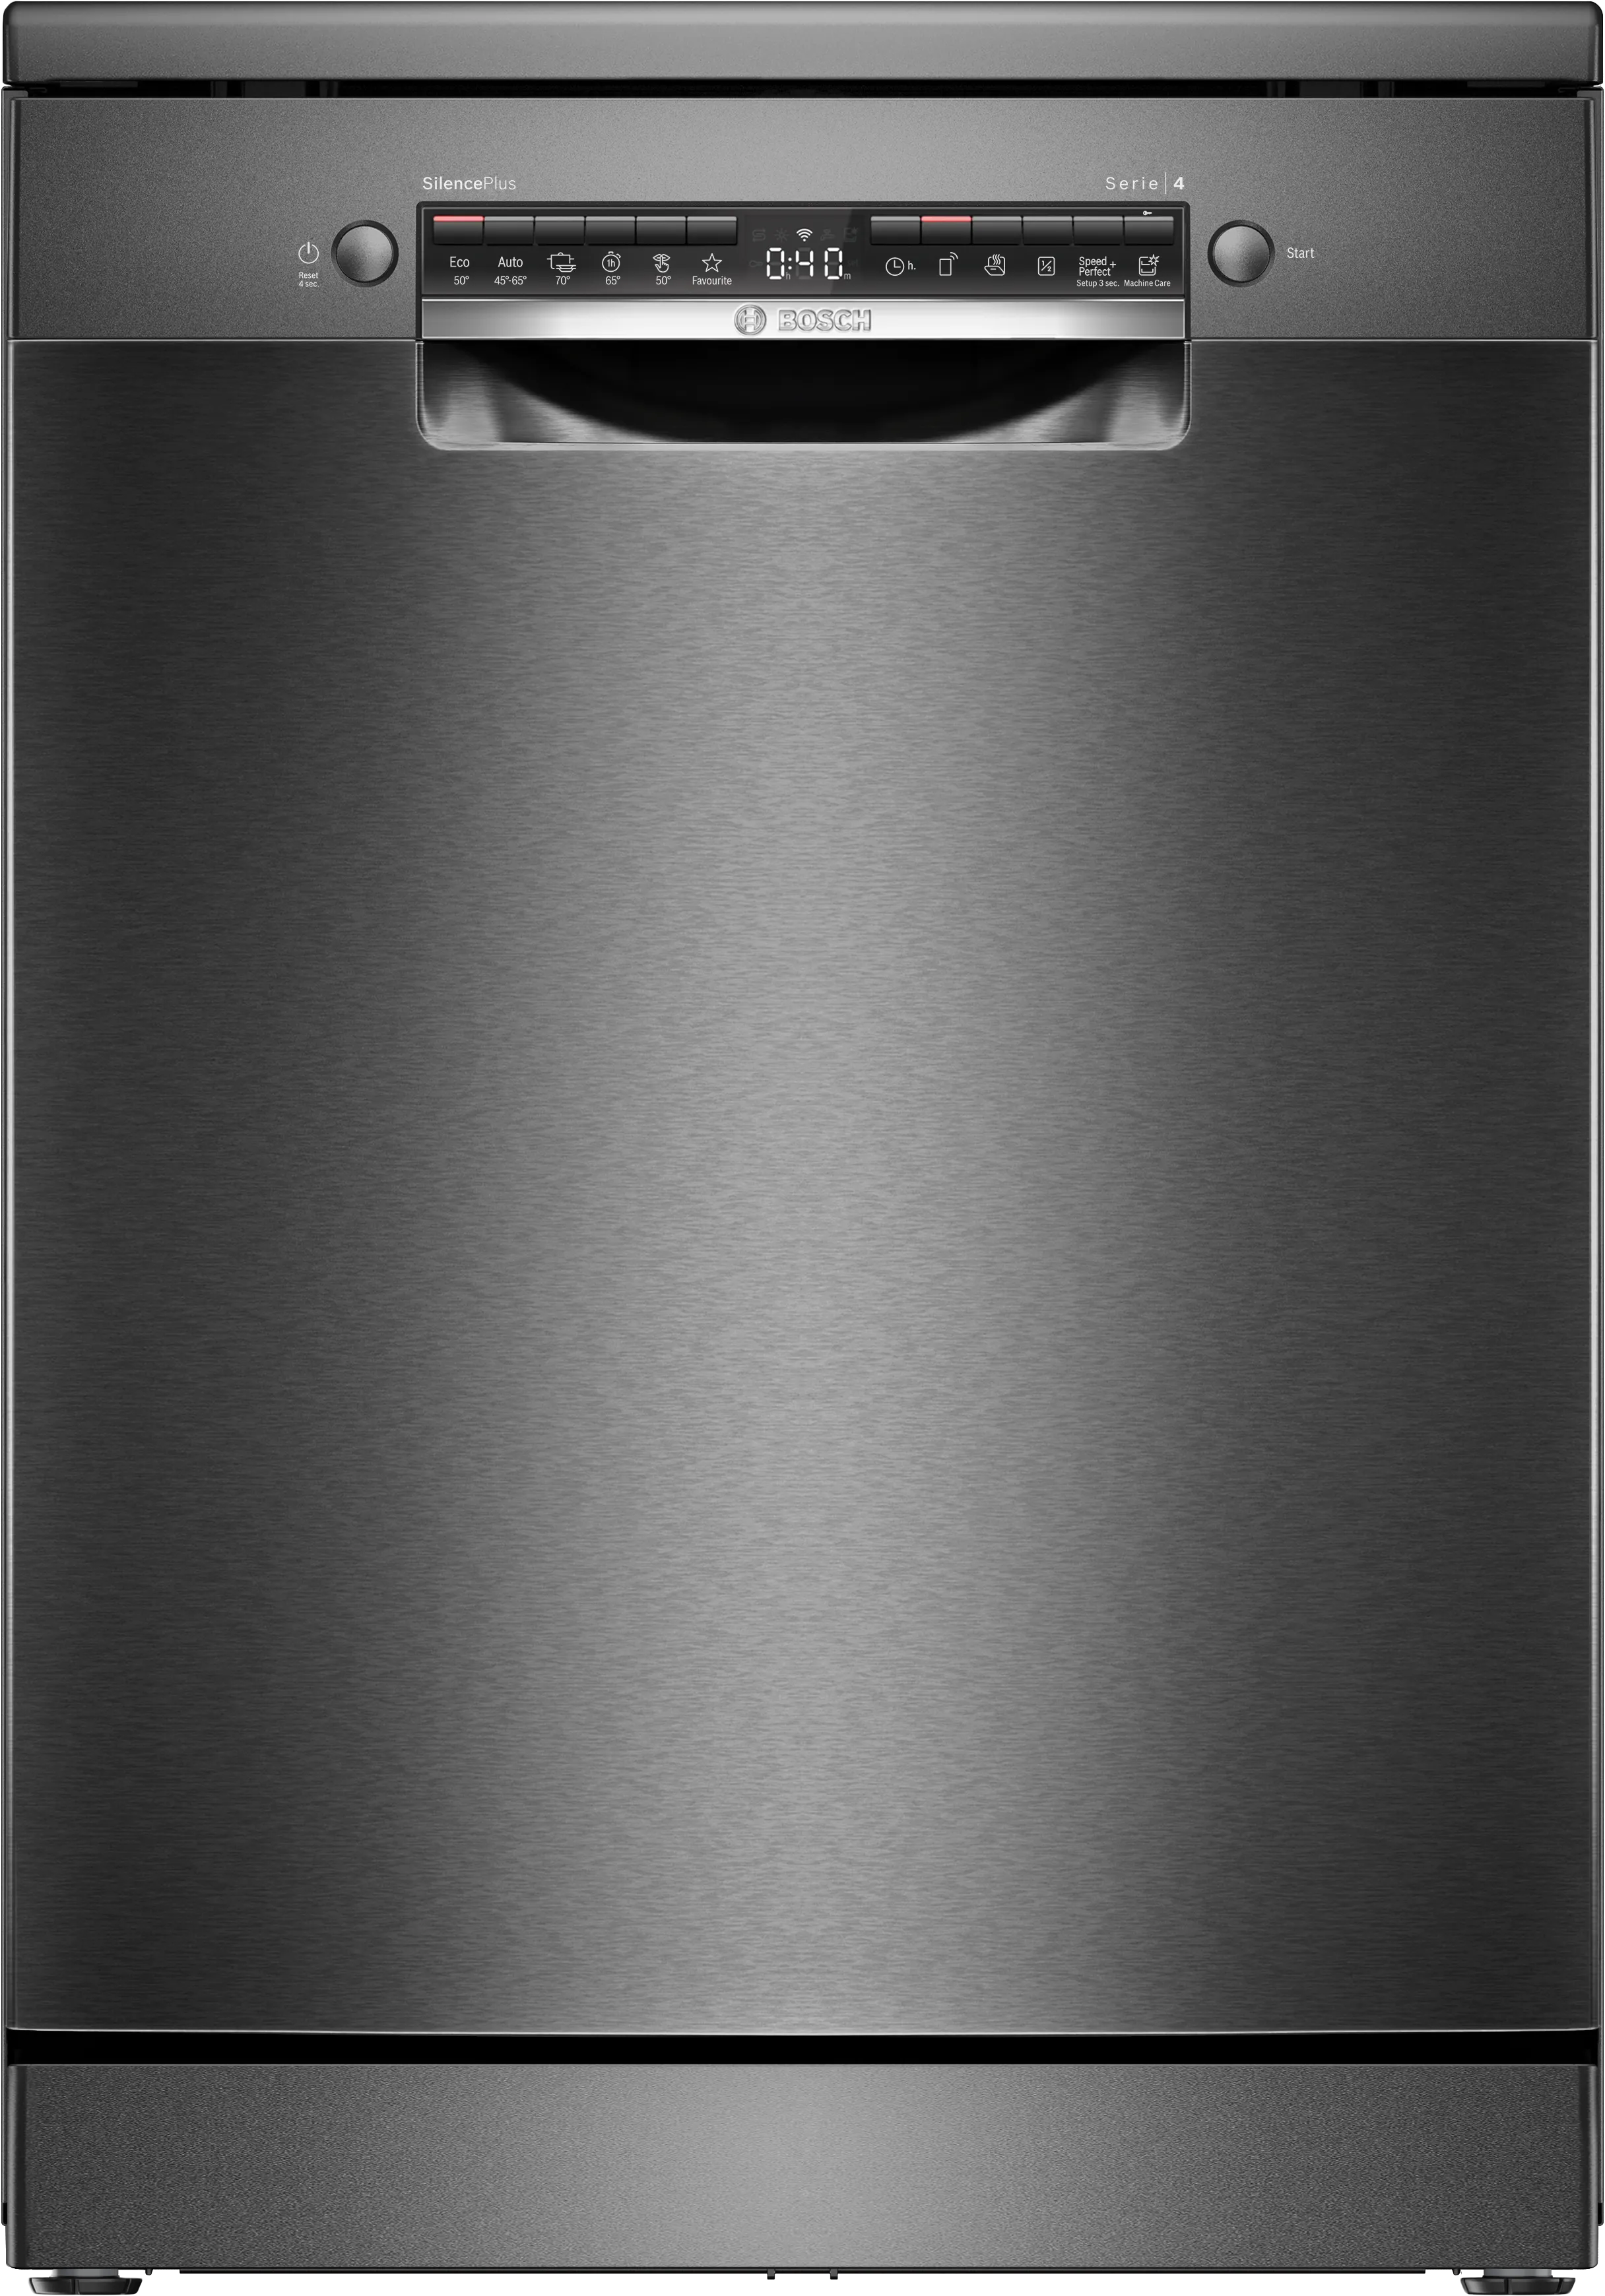 Series 4 free-standing dishwasher 60 cm Black inox 